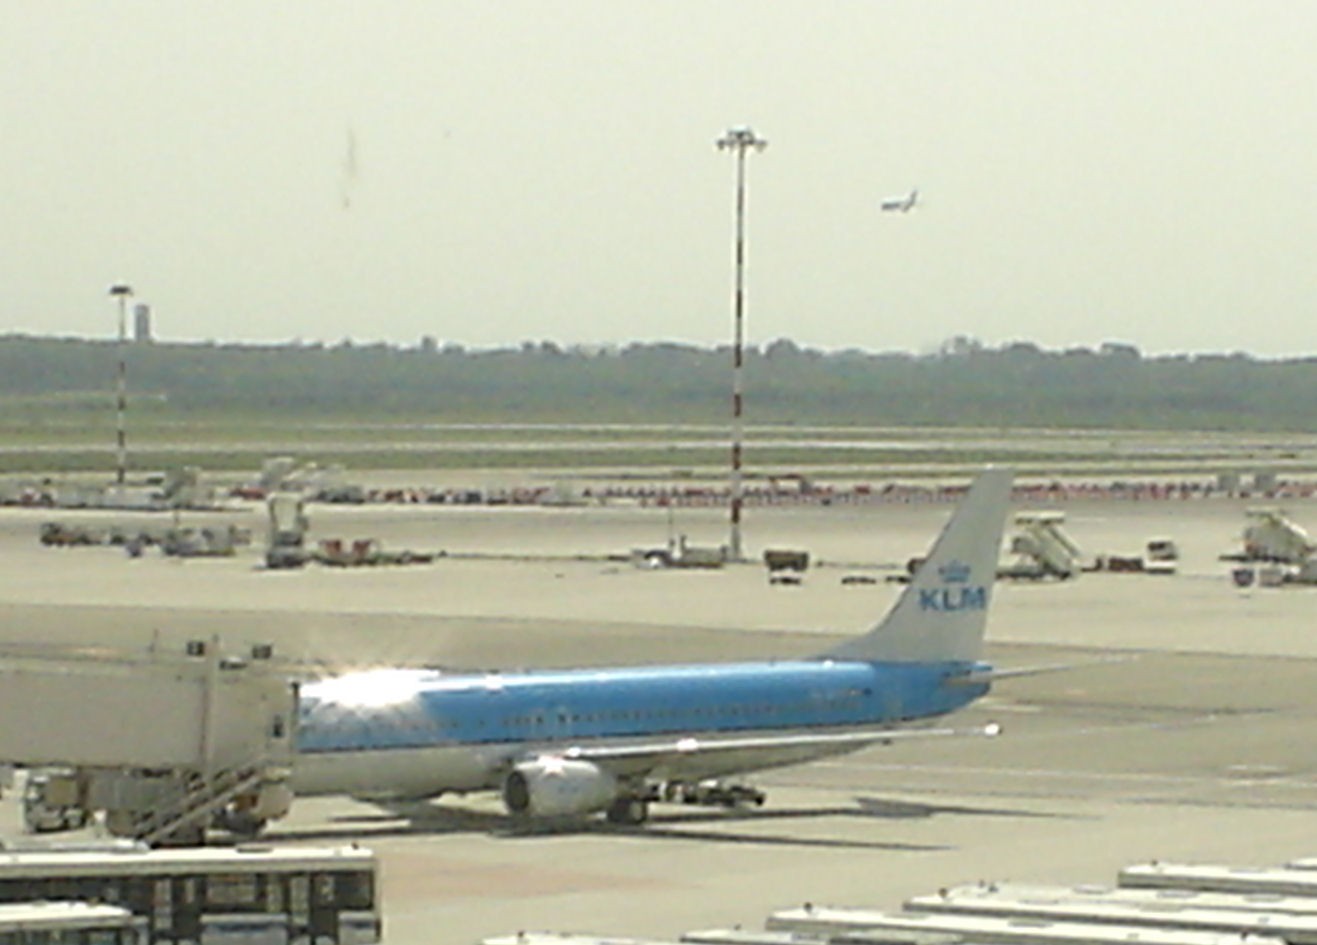 B-737 KLM